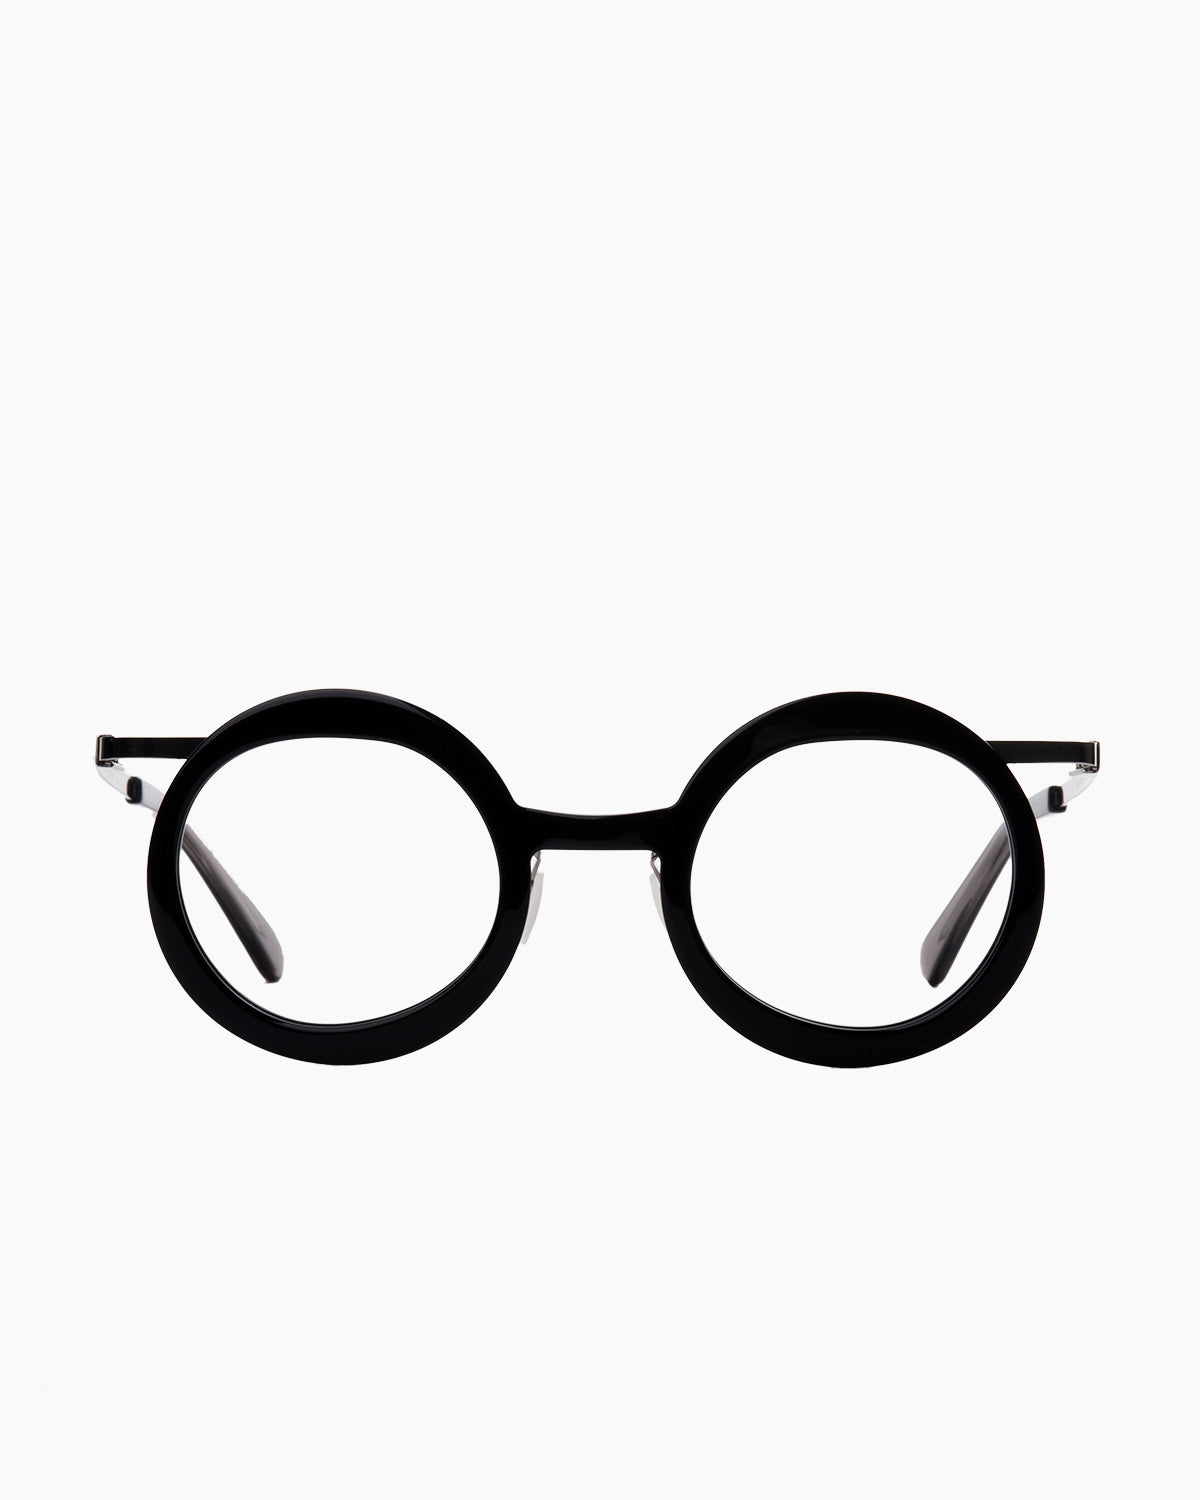 Gamine - Oculussödermalm - Black/Silver | Bar à lunettes:  Marie-Sophie Dion